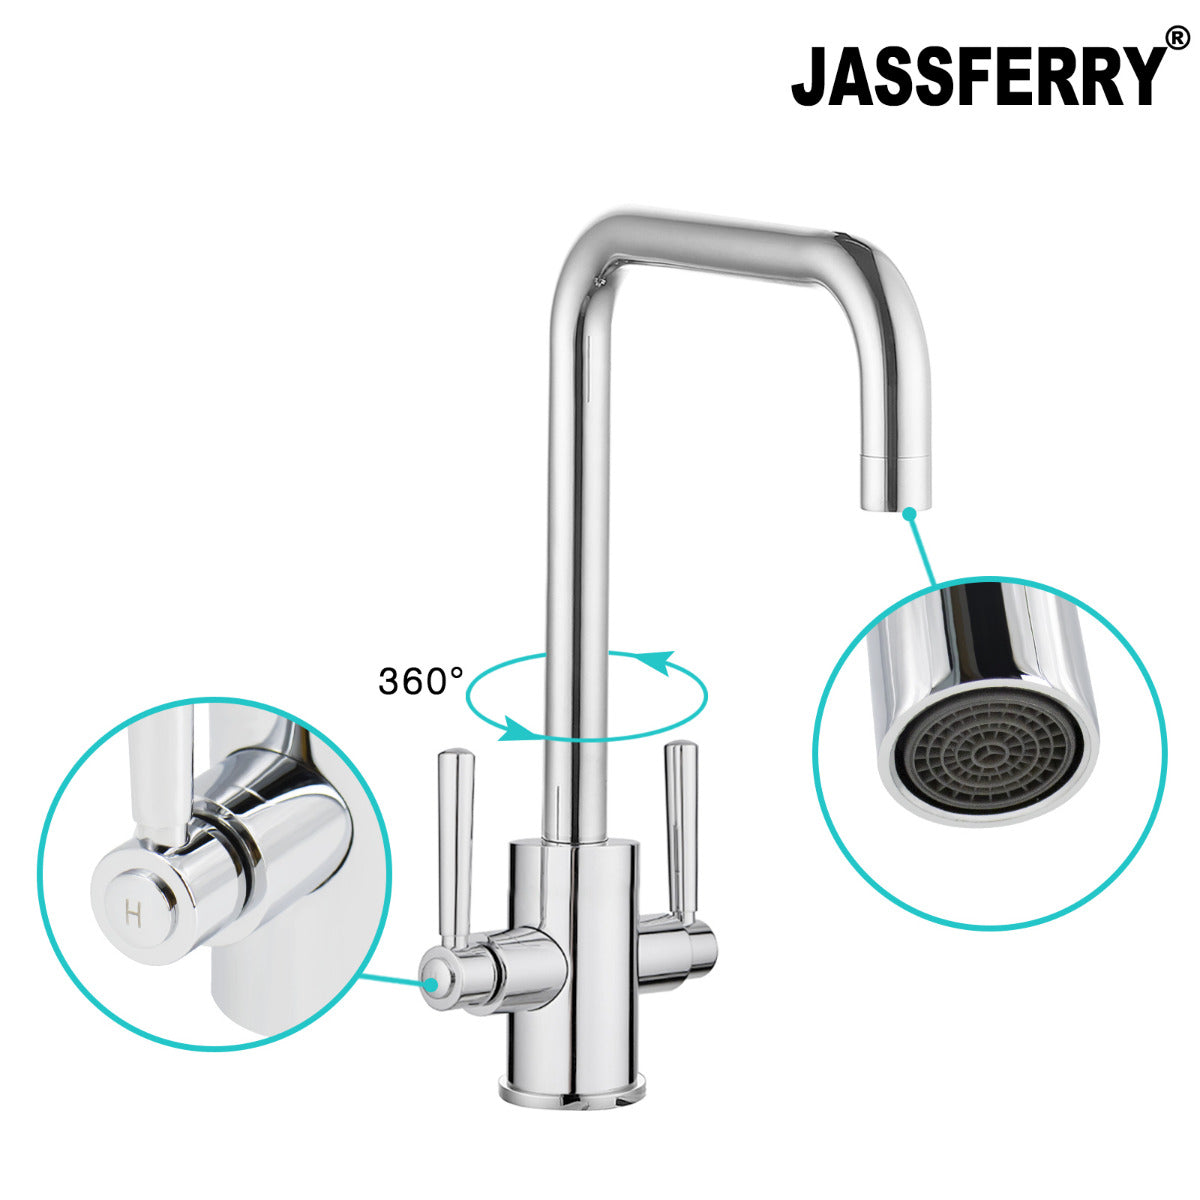 JassferryJASSFERRY Modern Kitchen Sink Mixer Tap Two Handle Swivel Spout ChromeKitchen taps